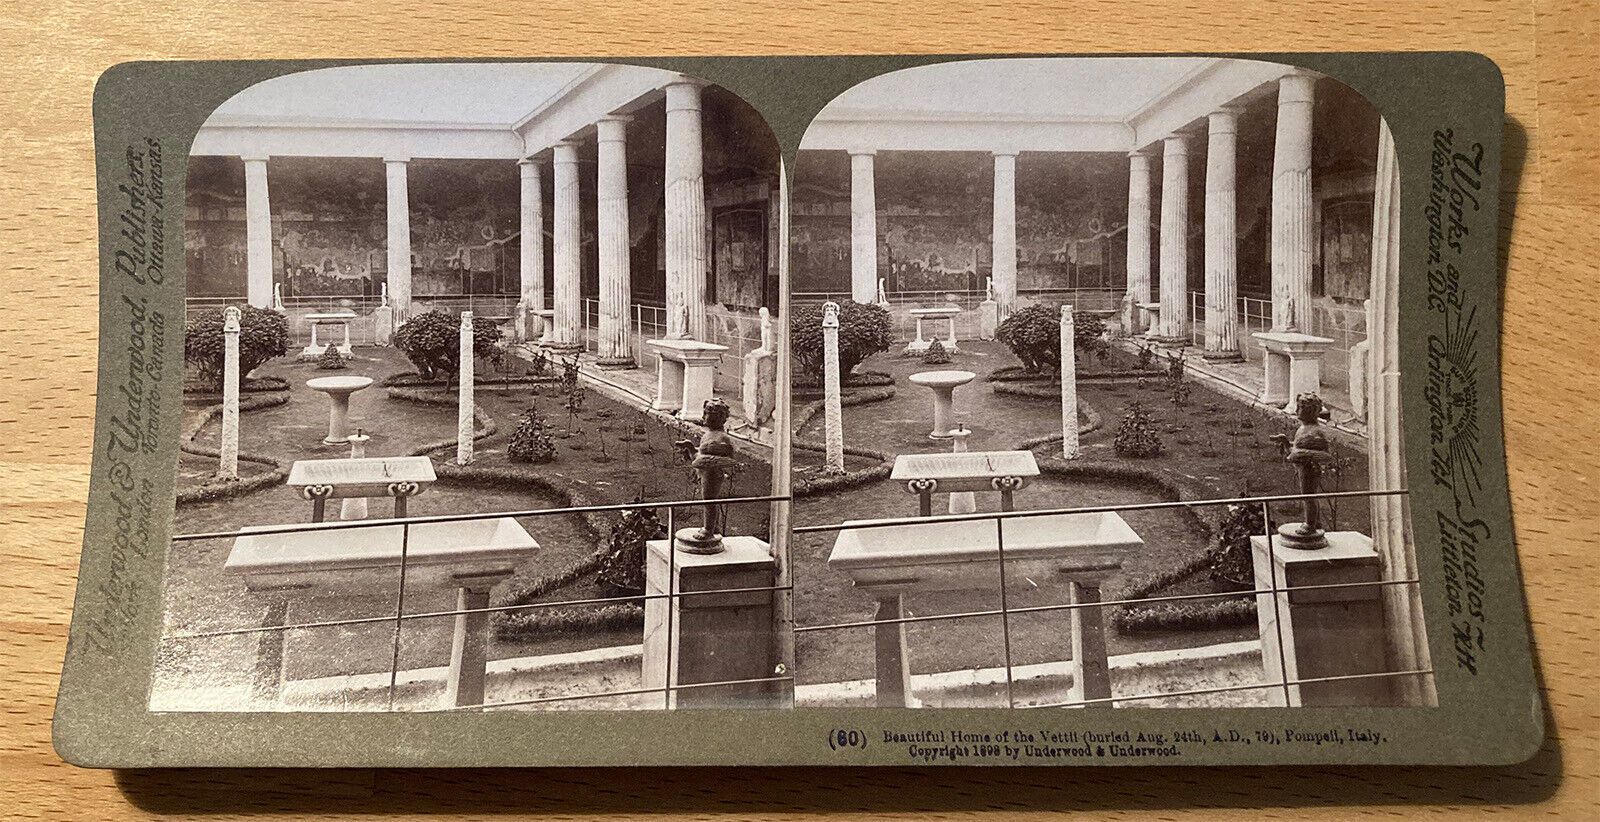 Home of the Vettii, Pompeii, Italy 1898 – Stereoview Slide Underwood & Underwood